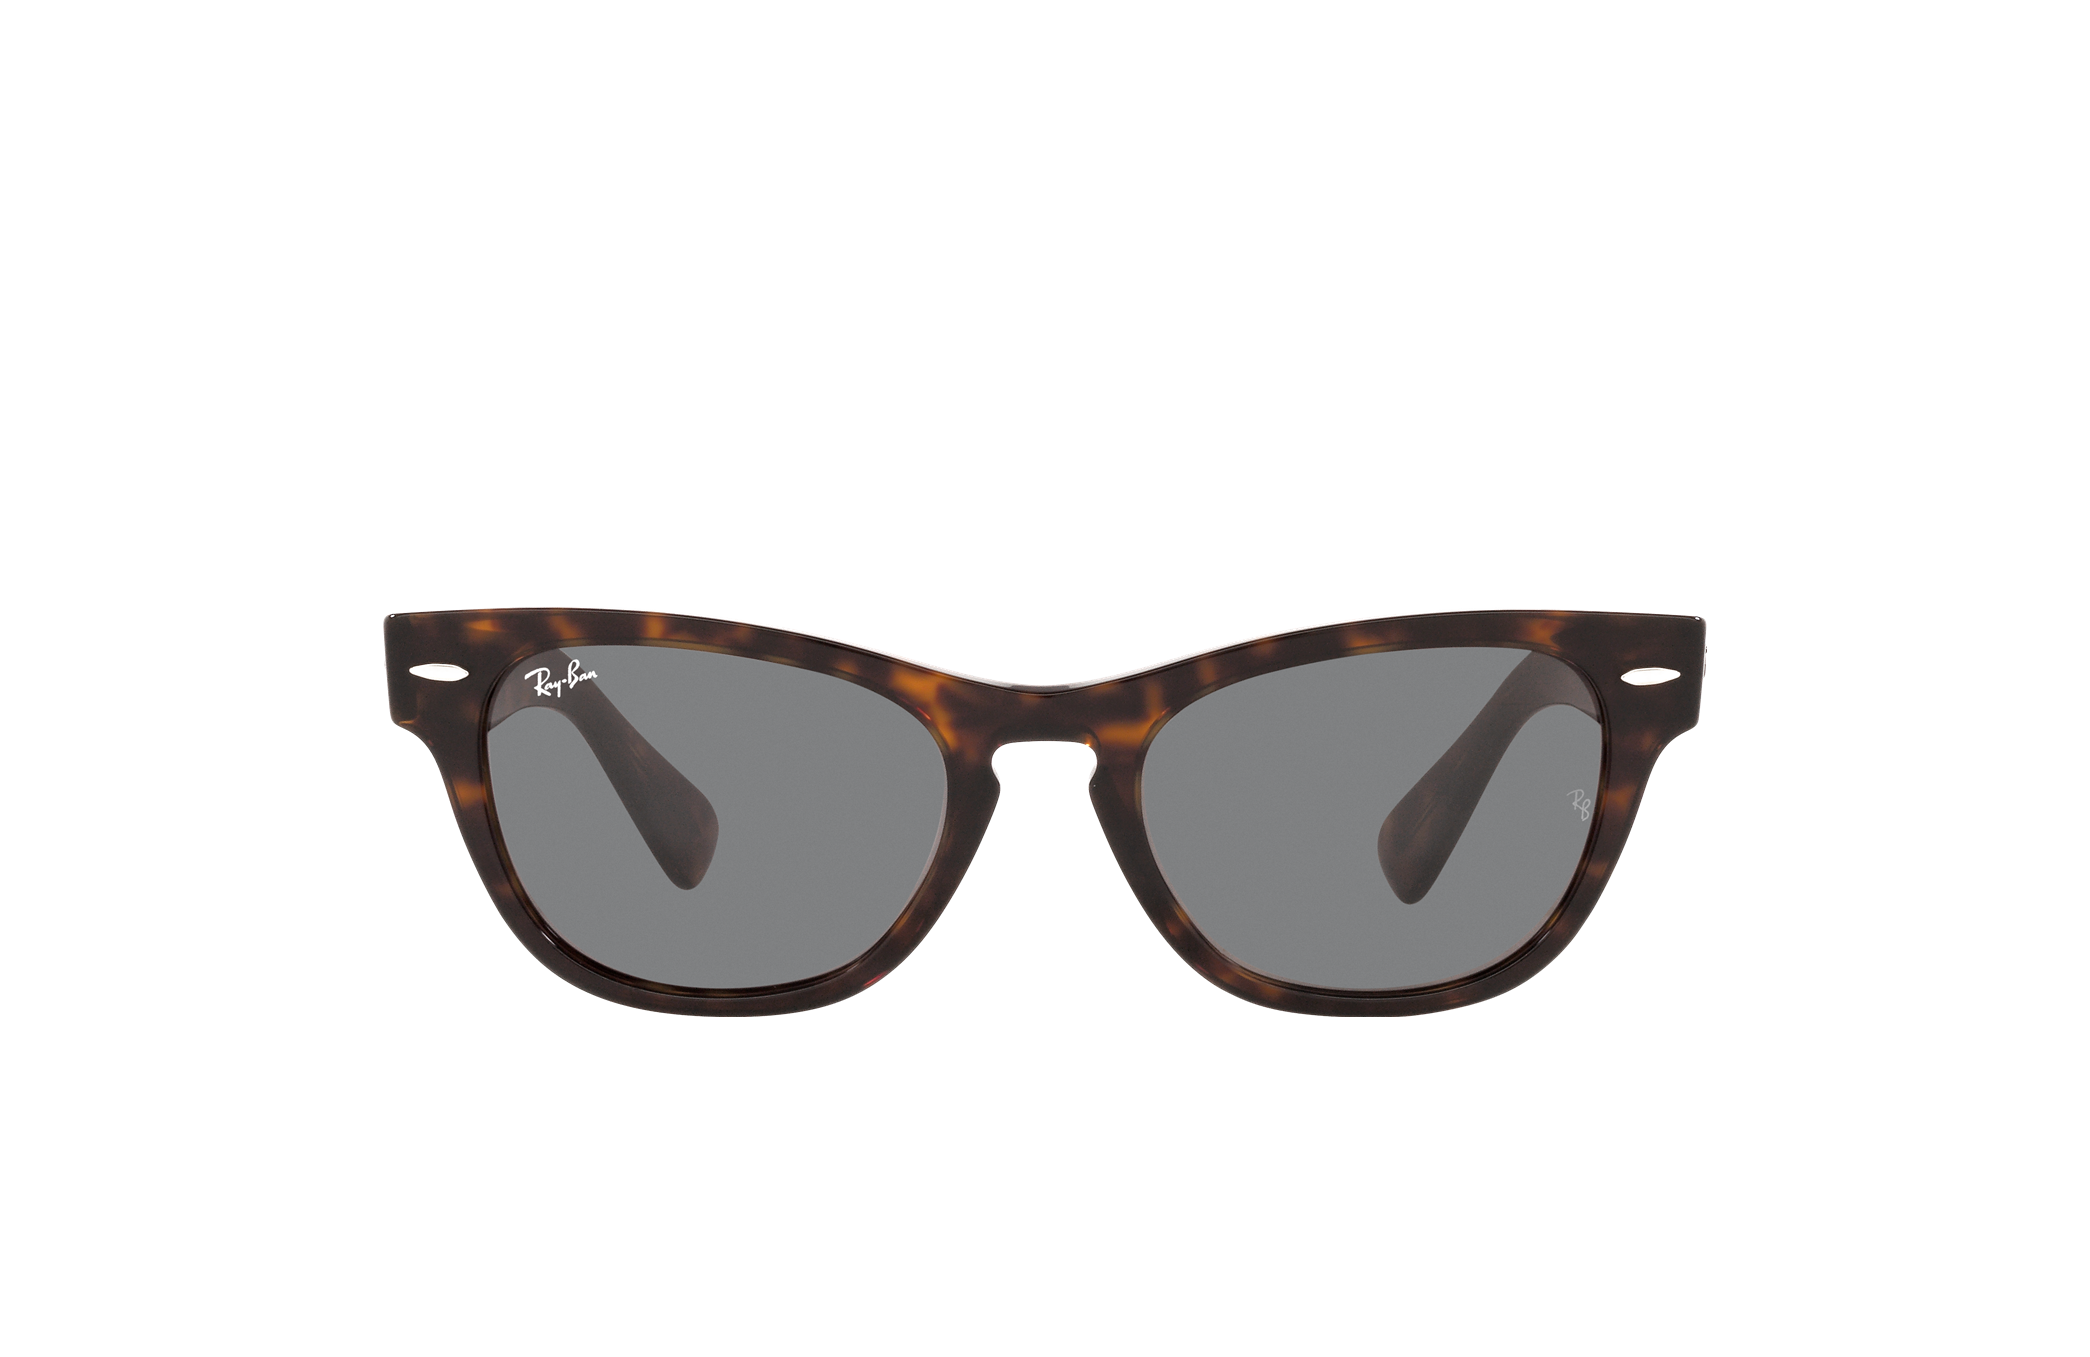 discount 81% MEN FASHION Accessories Black Single Jack & Jones sunglasses 